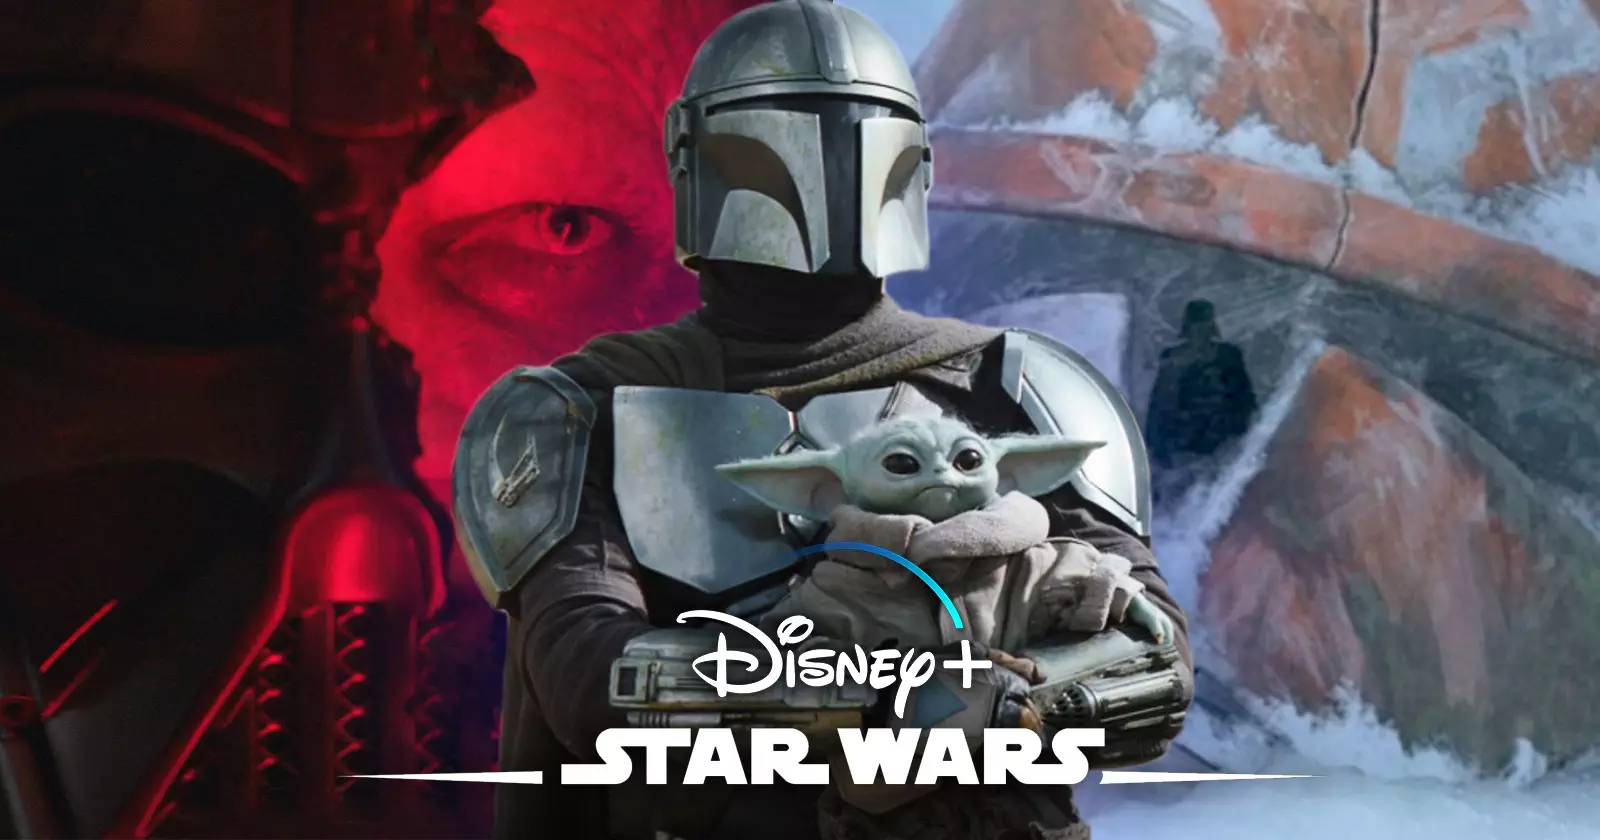 Star Wars Still Popular as Disney+'s Mandalorian S2 Debuts Big